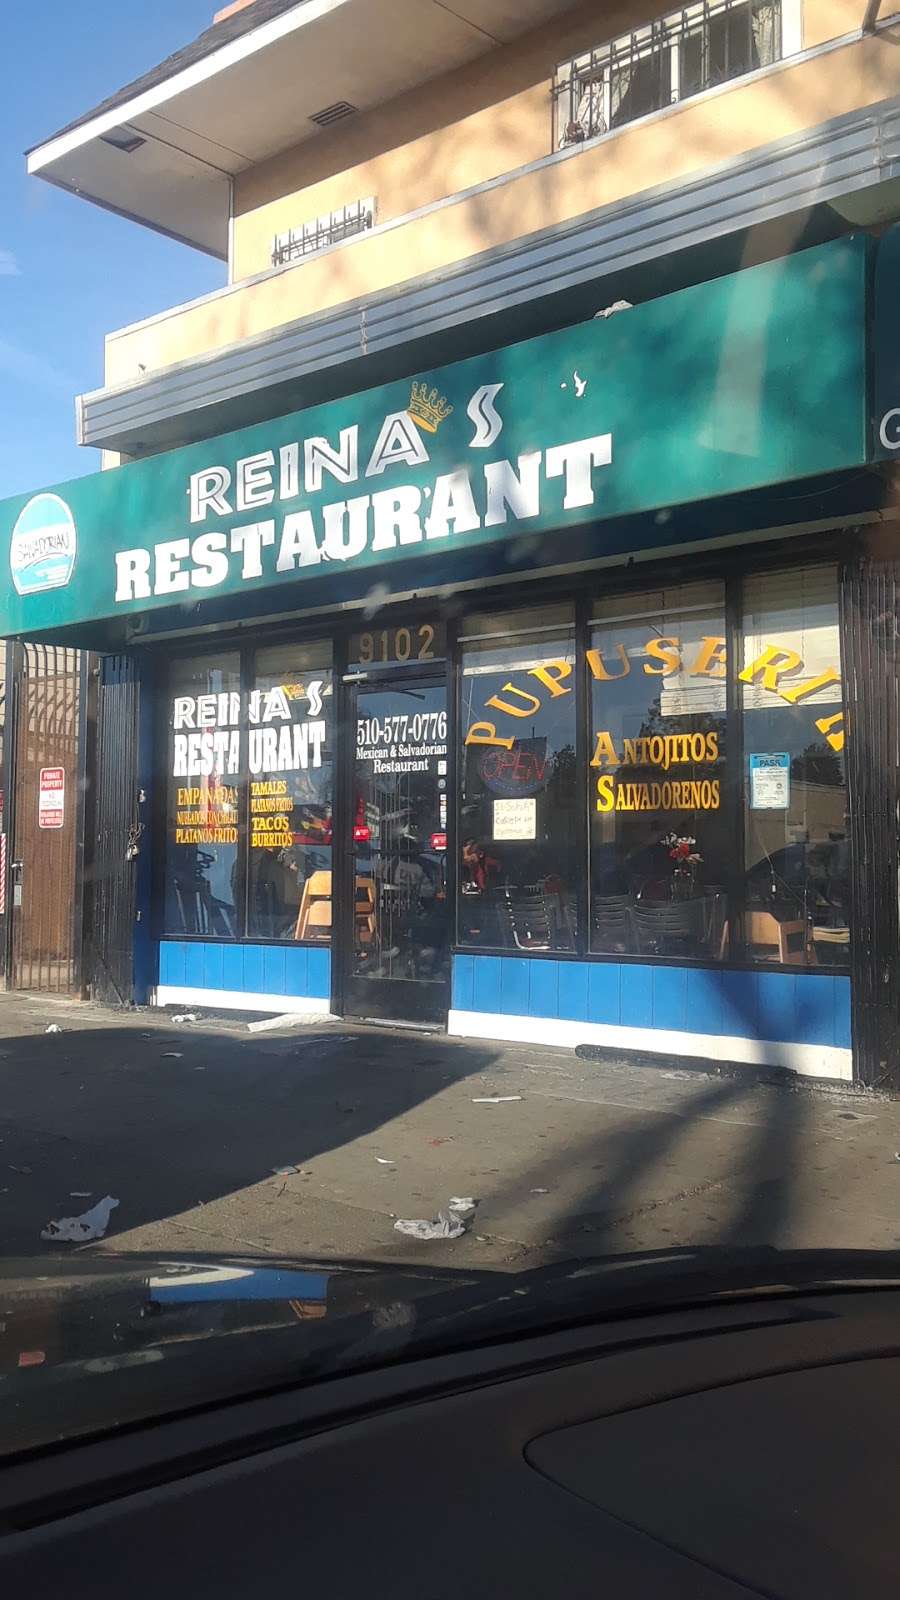 Reinas Restaurant | 9102 International Blvd, Oakland, CA 94603 | Phone: (510) 577-0776